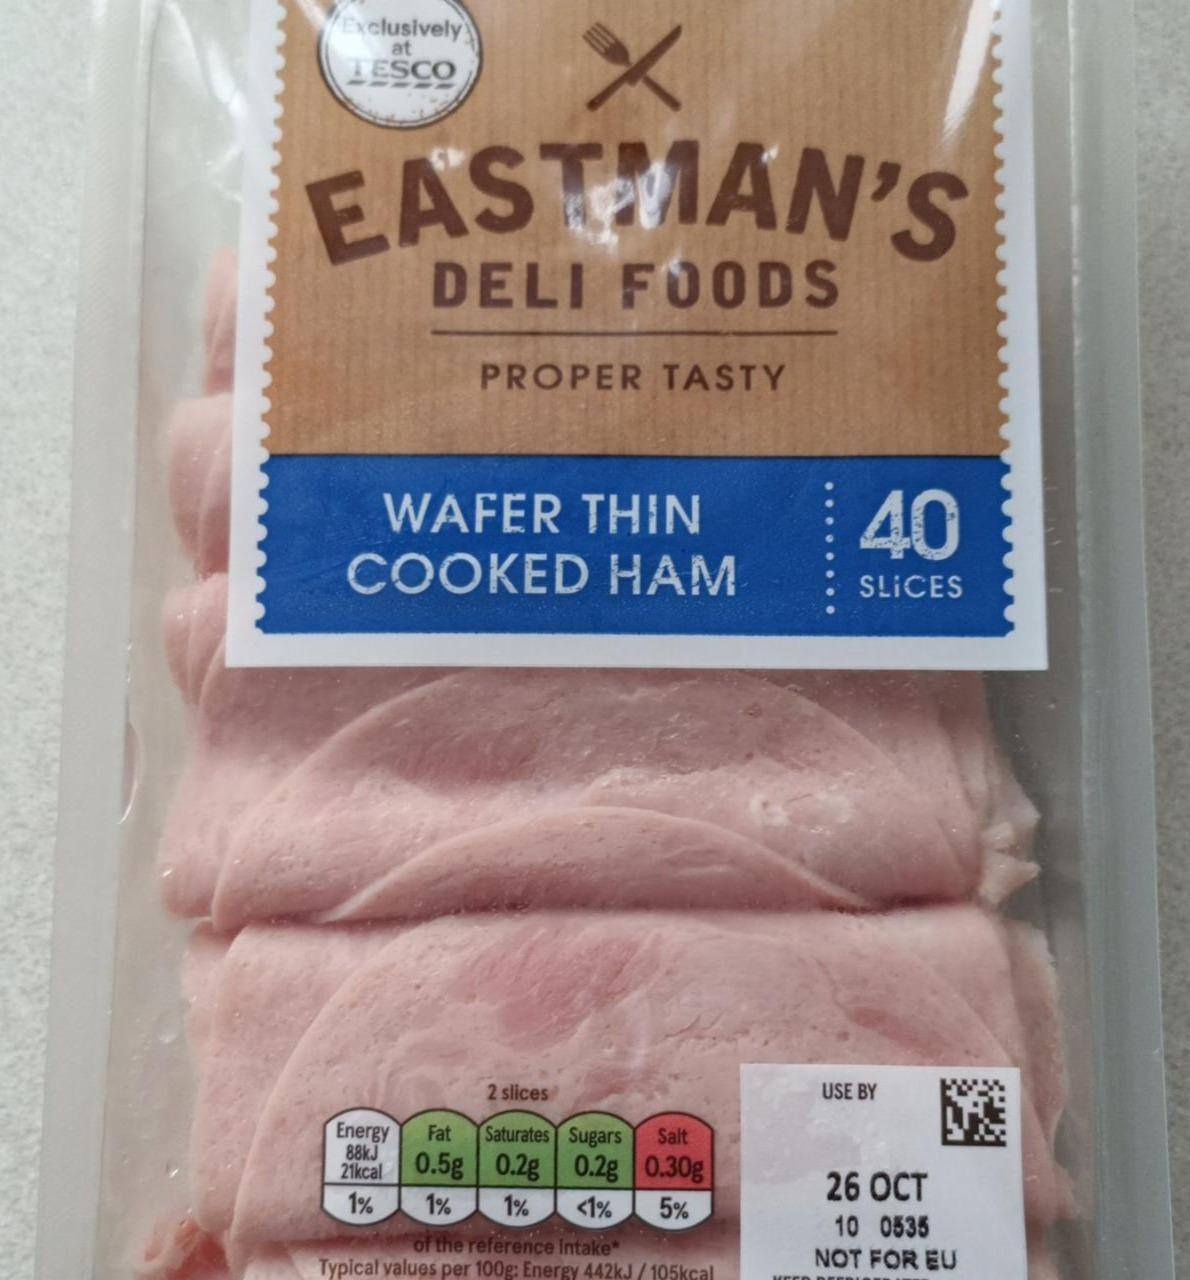 Fotografie - Wafer thin cooked ham Eastman's deli foods